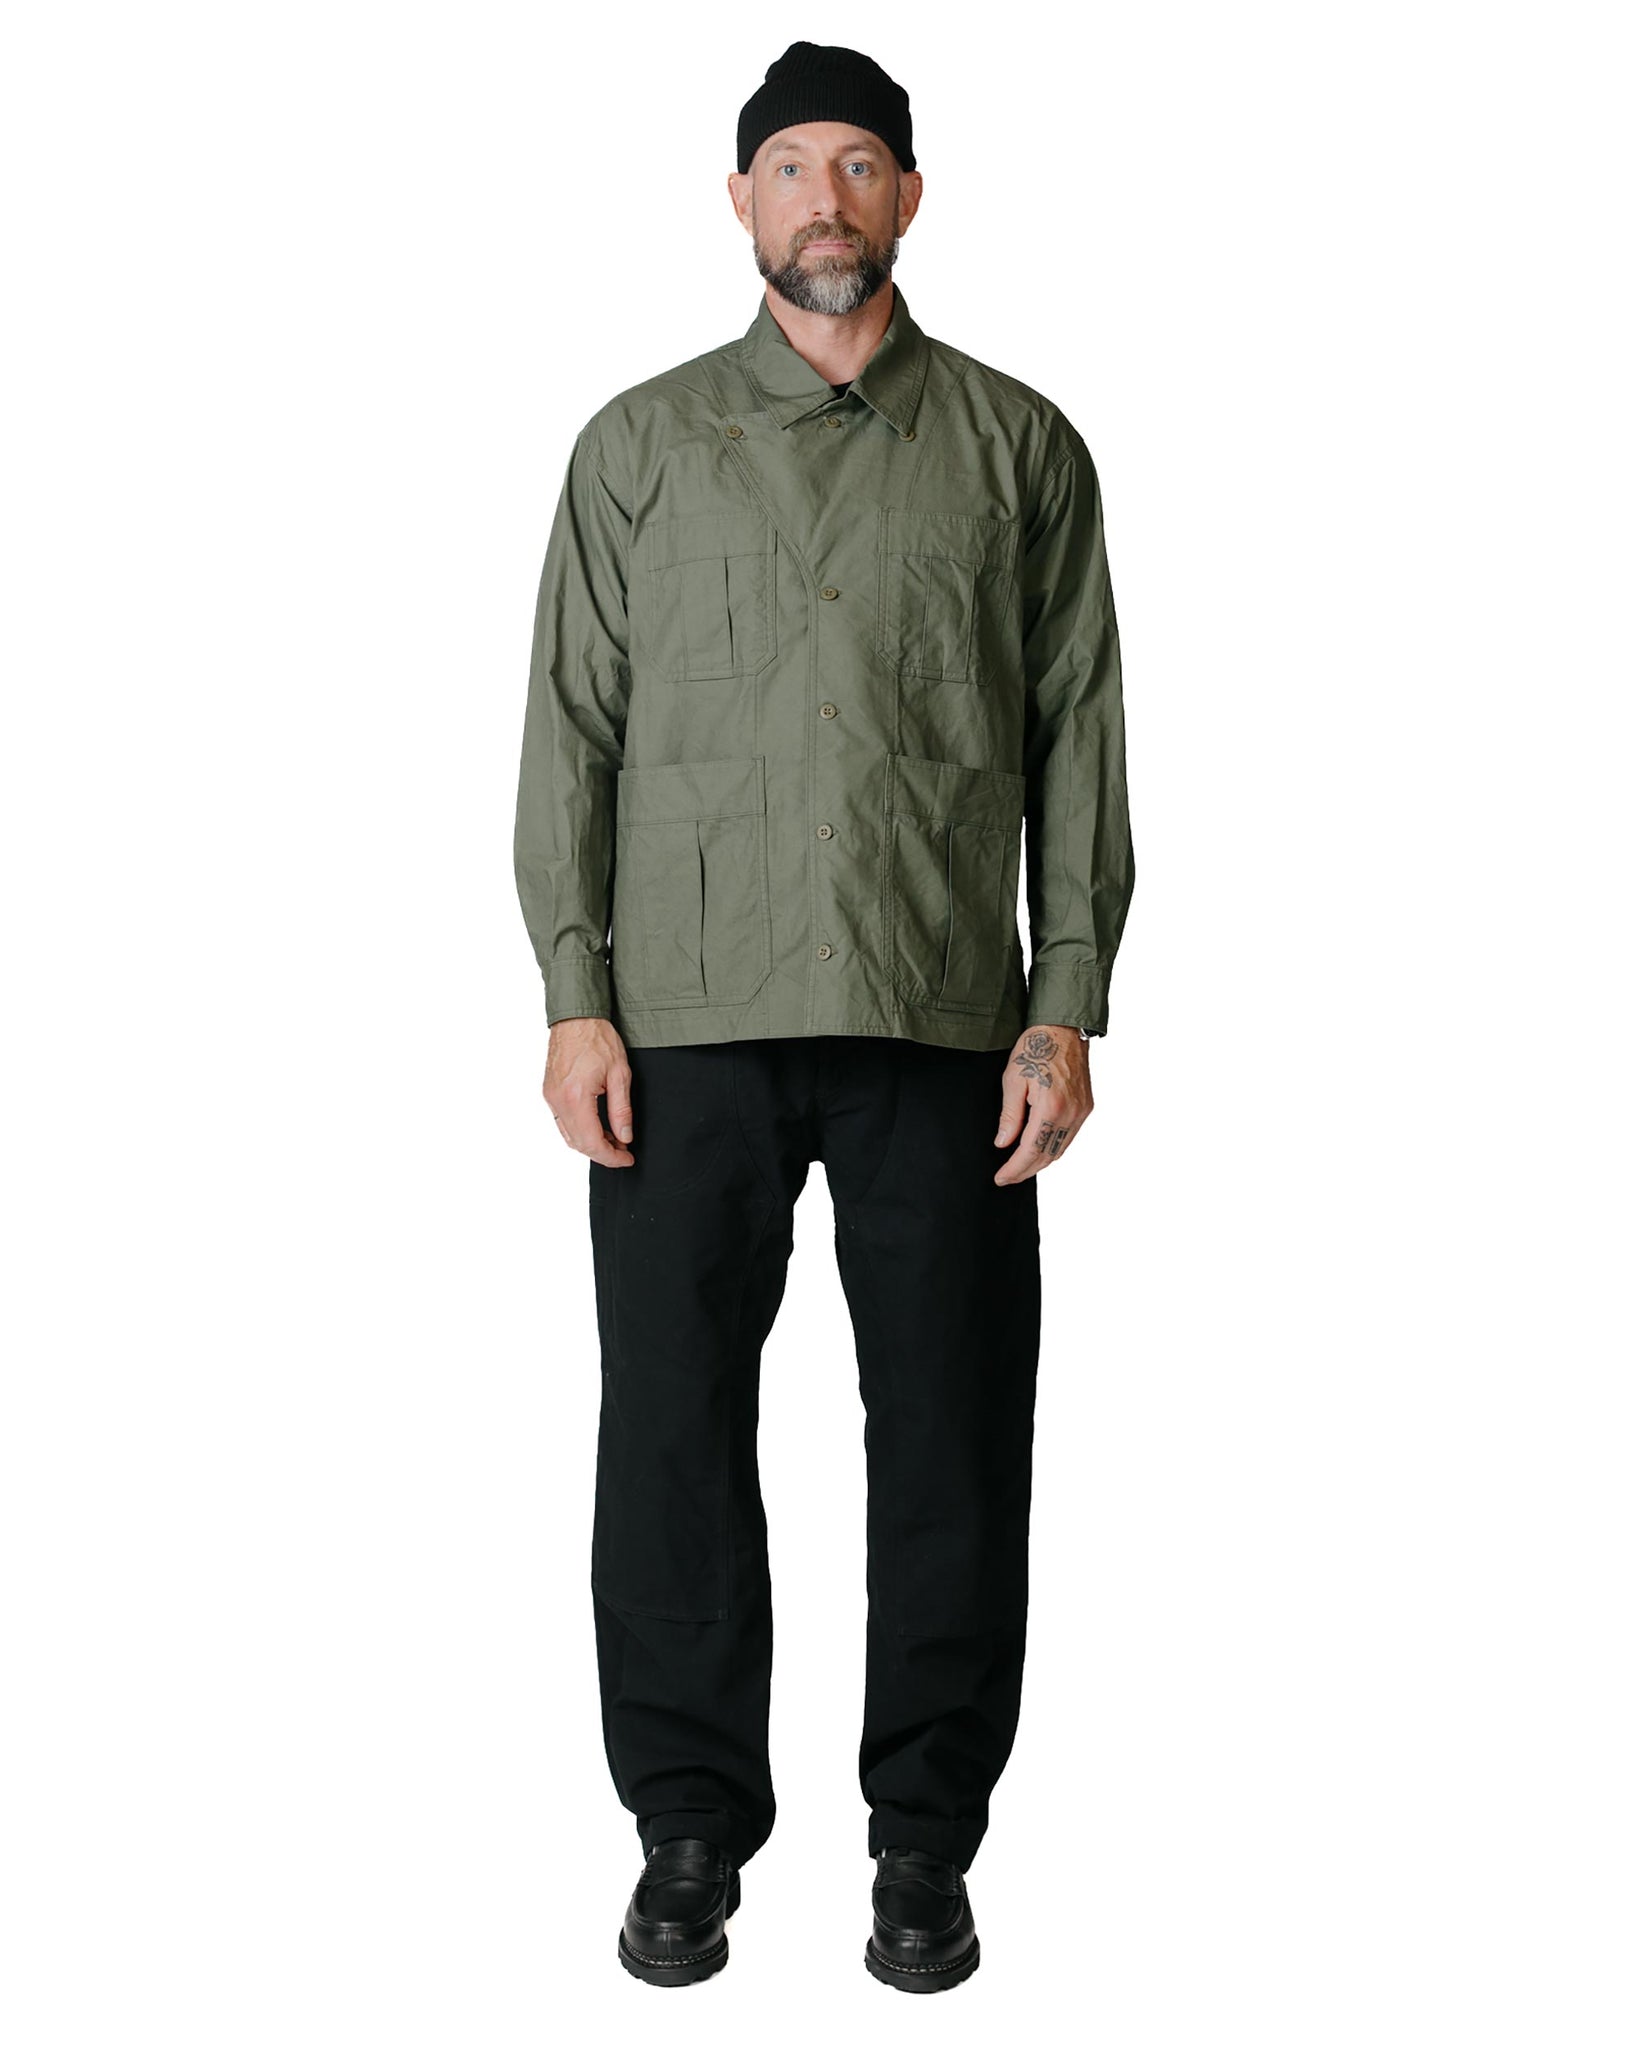 ts(s) Military Shirt Jacket High Density Cotton Canvas Cloth OD Model Full